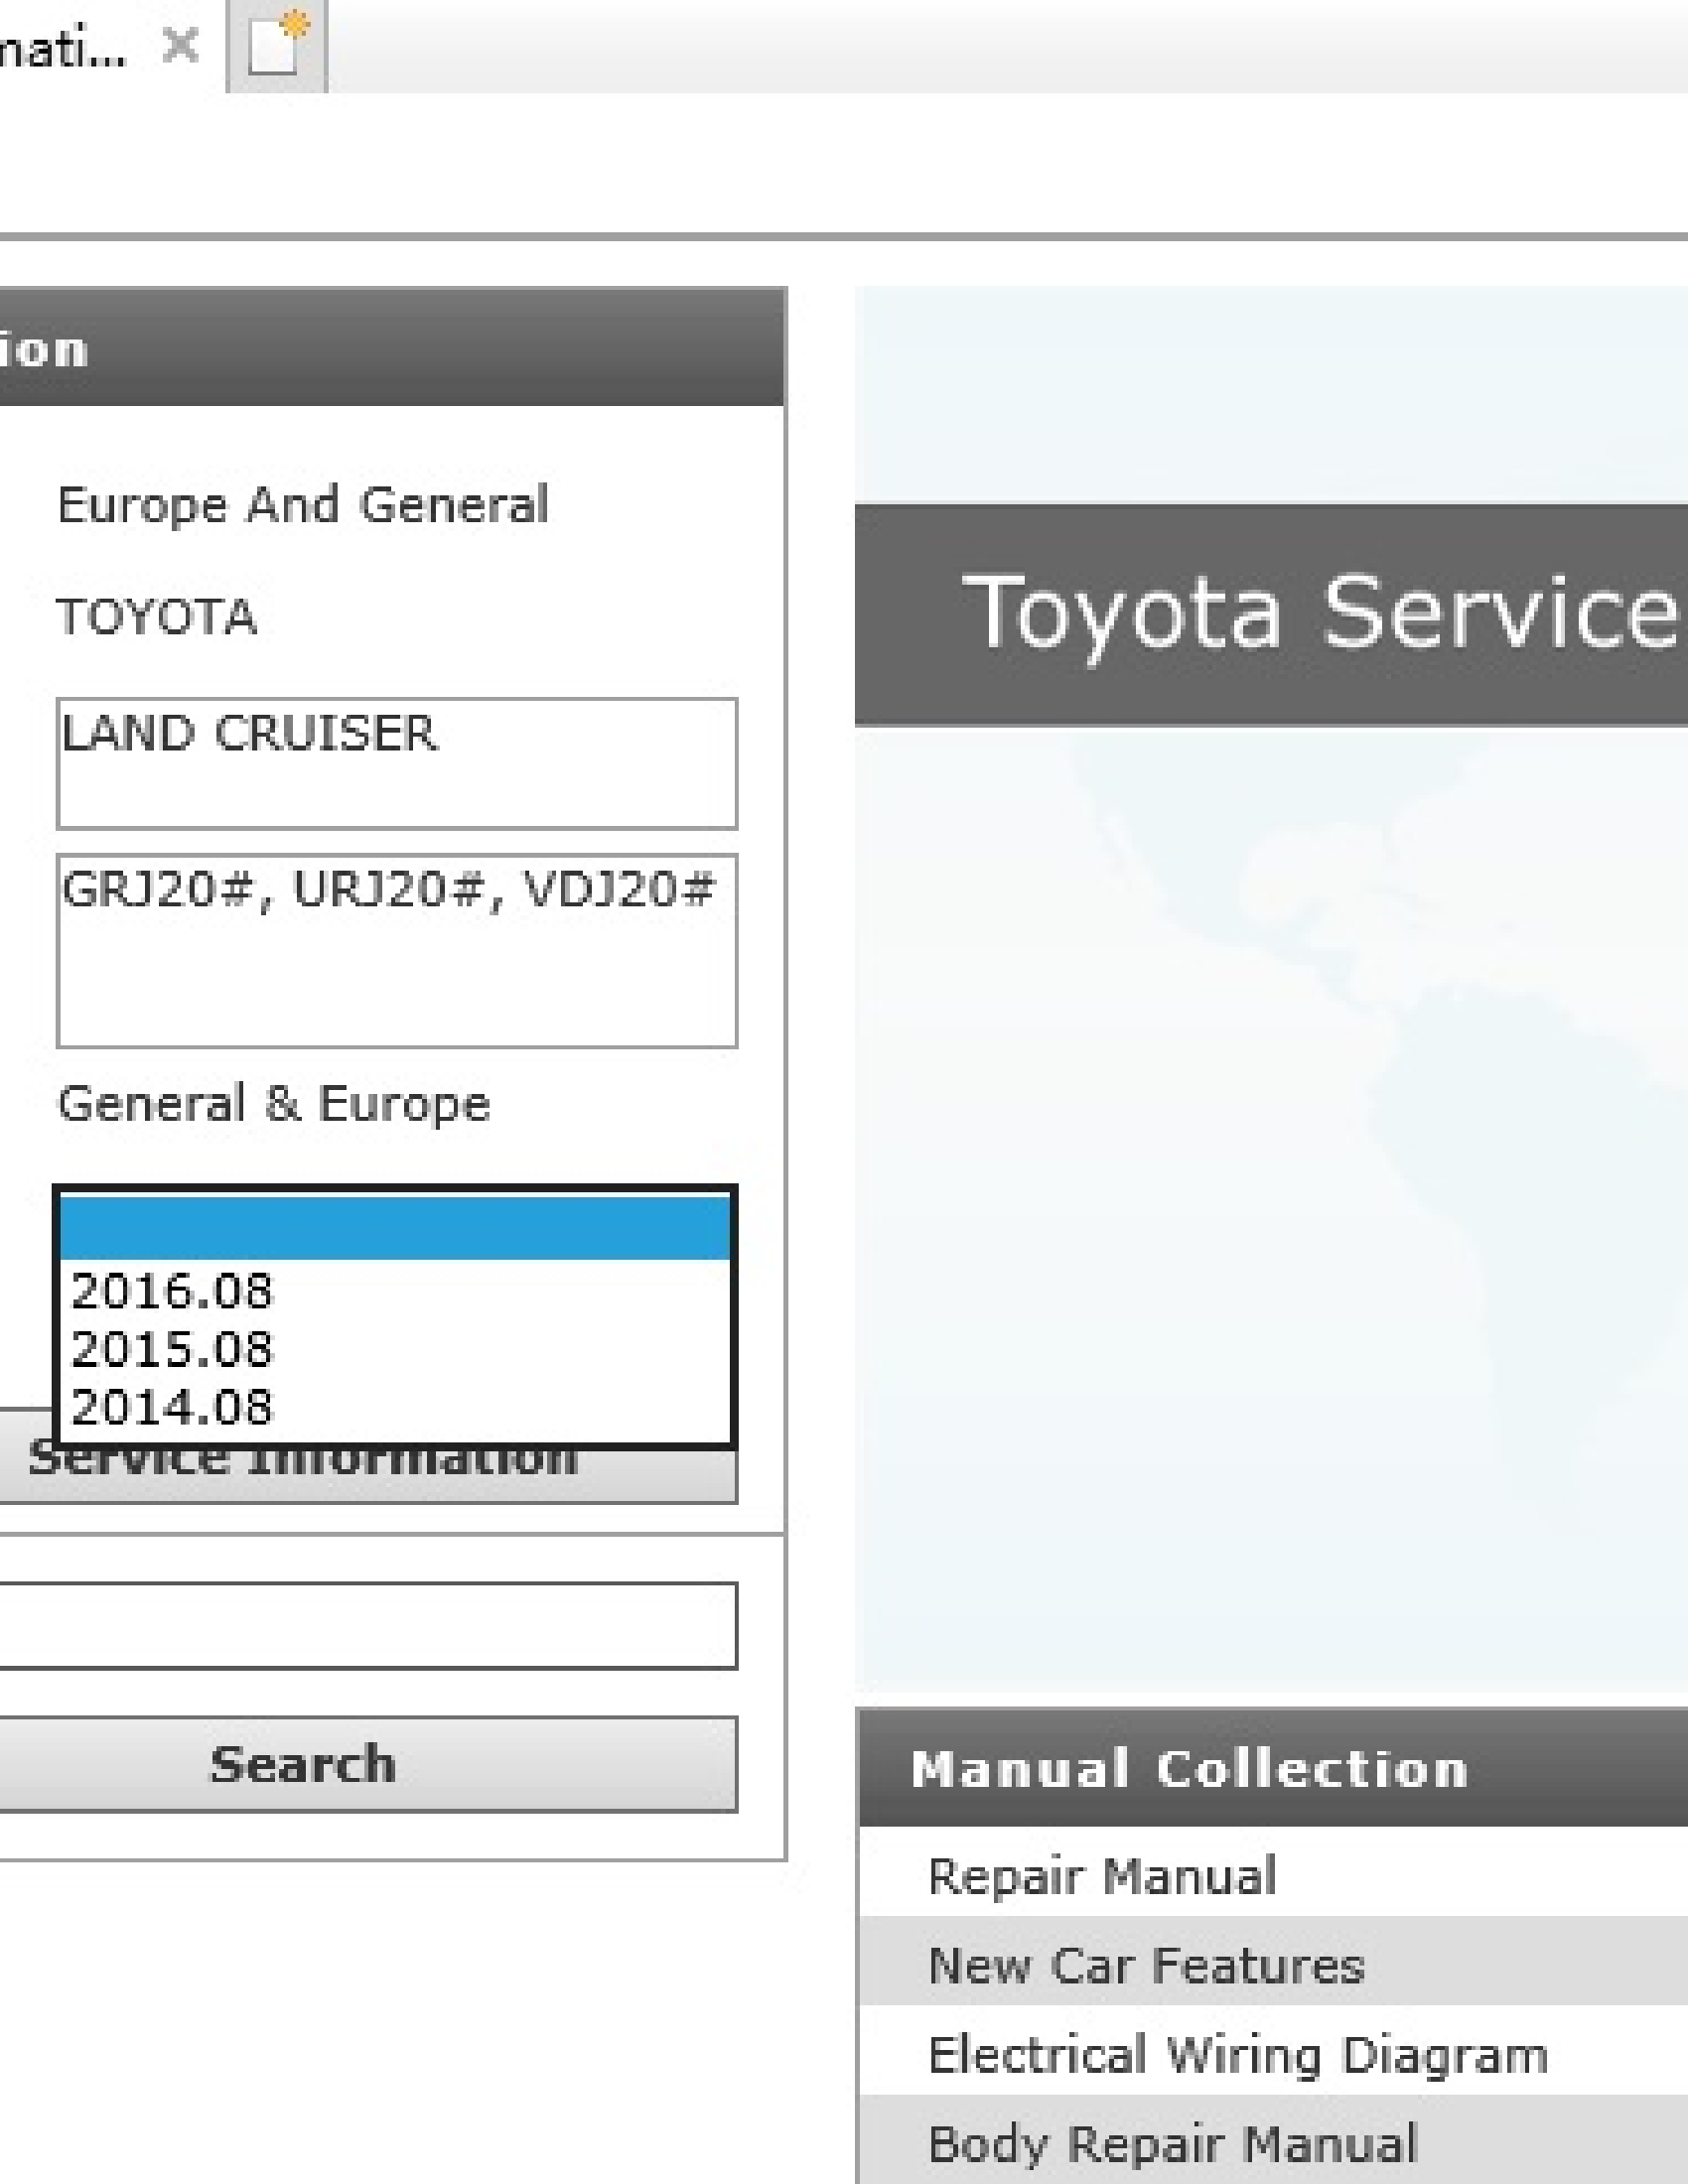 Toyota (GRJ20# LAND CRUISER manual